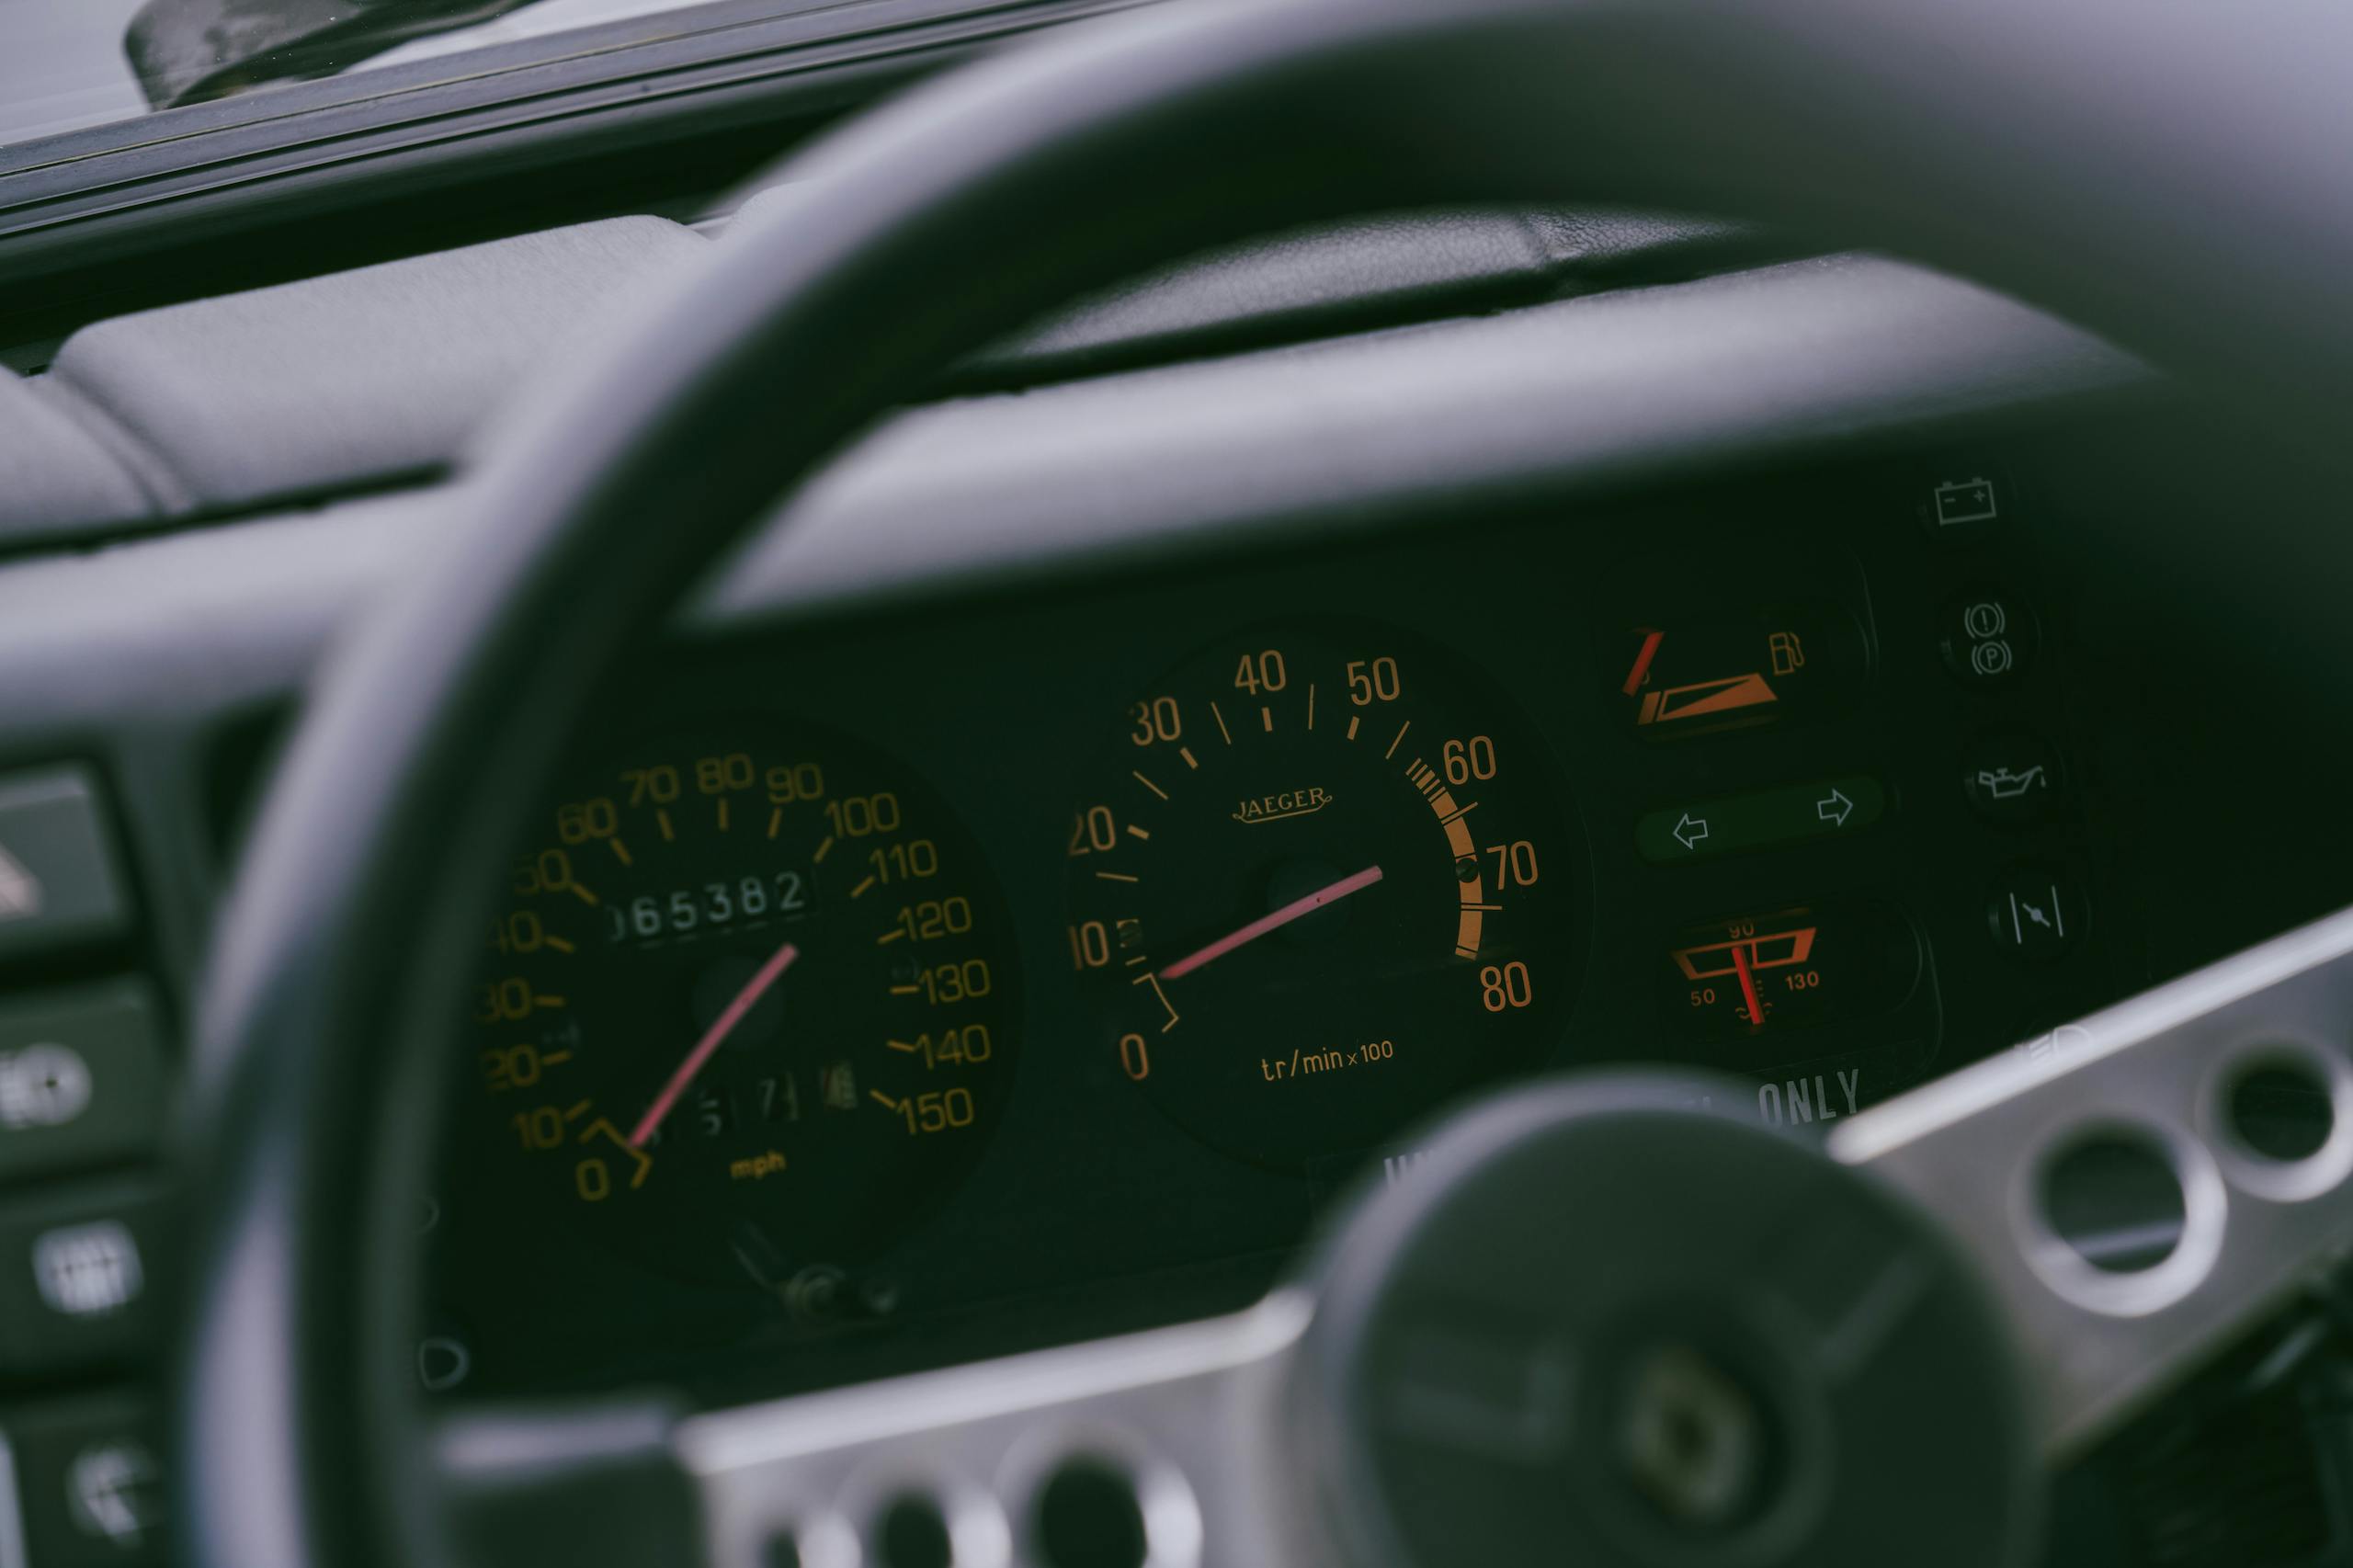 1985 Renault R5 Turbo 2 interior gauges detail